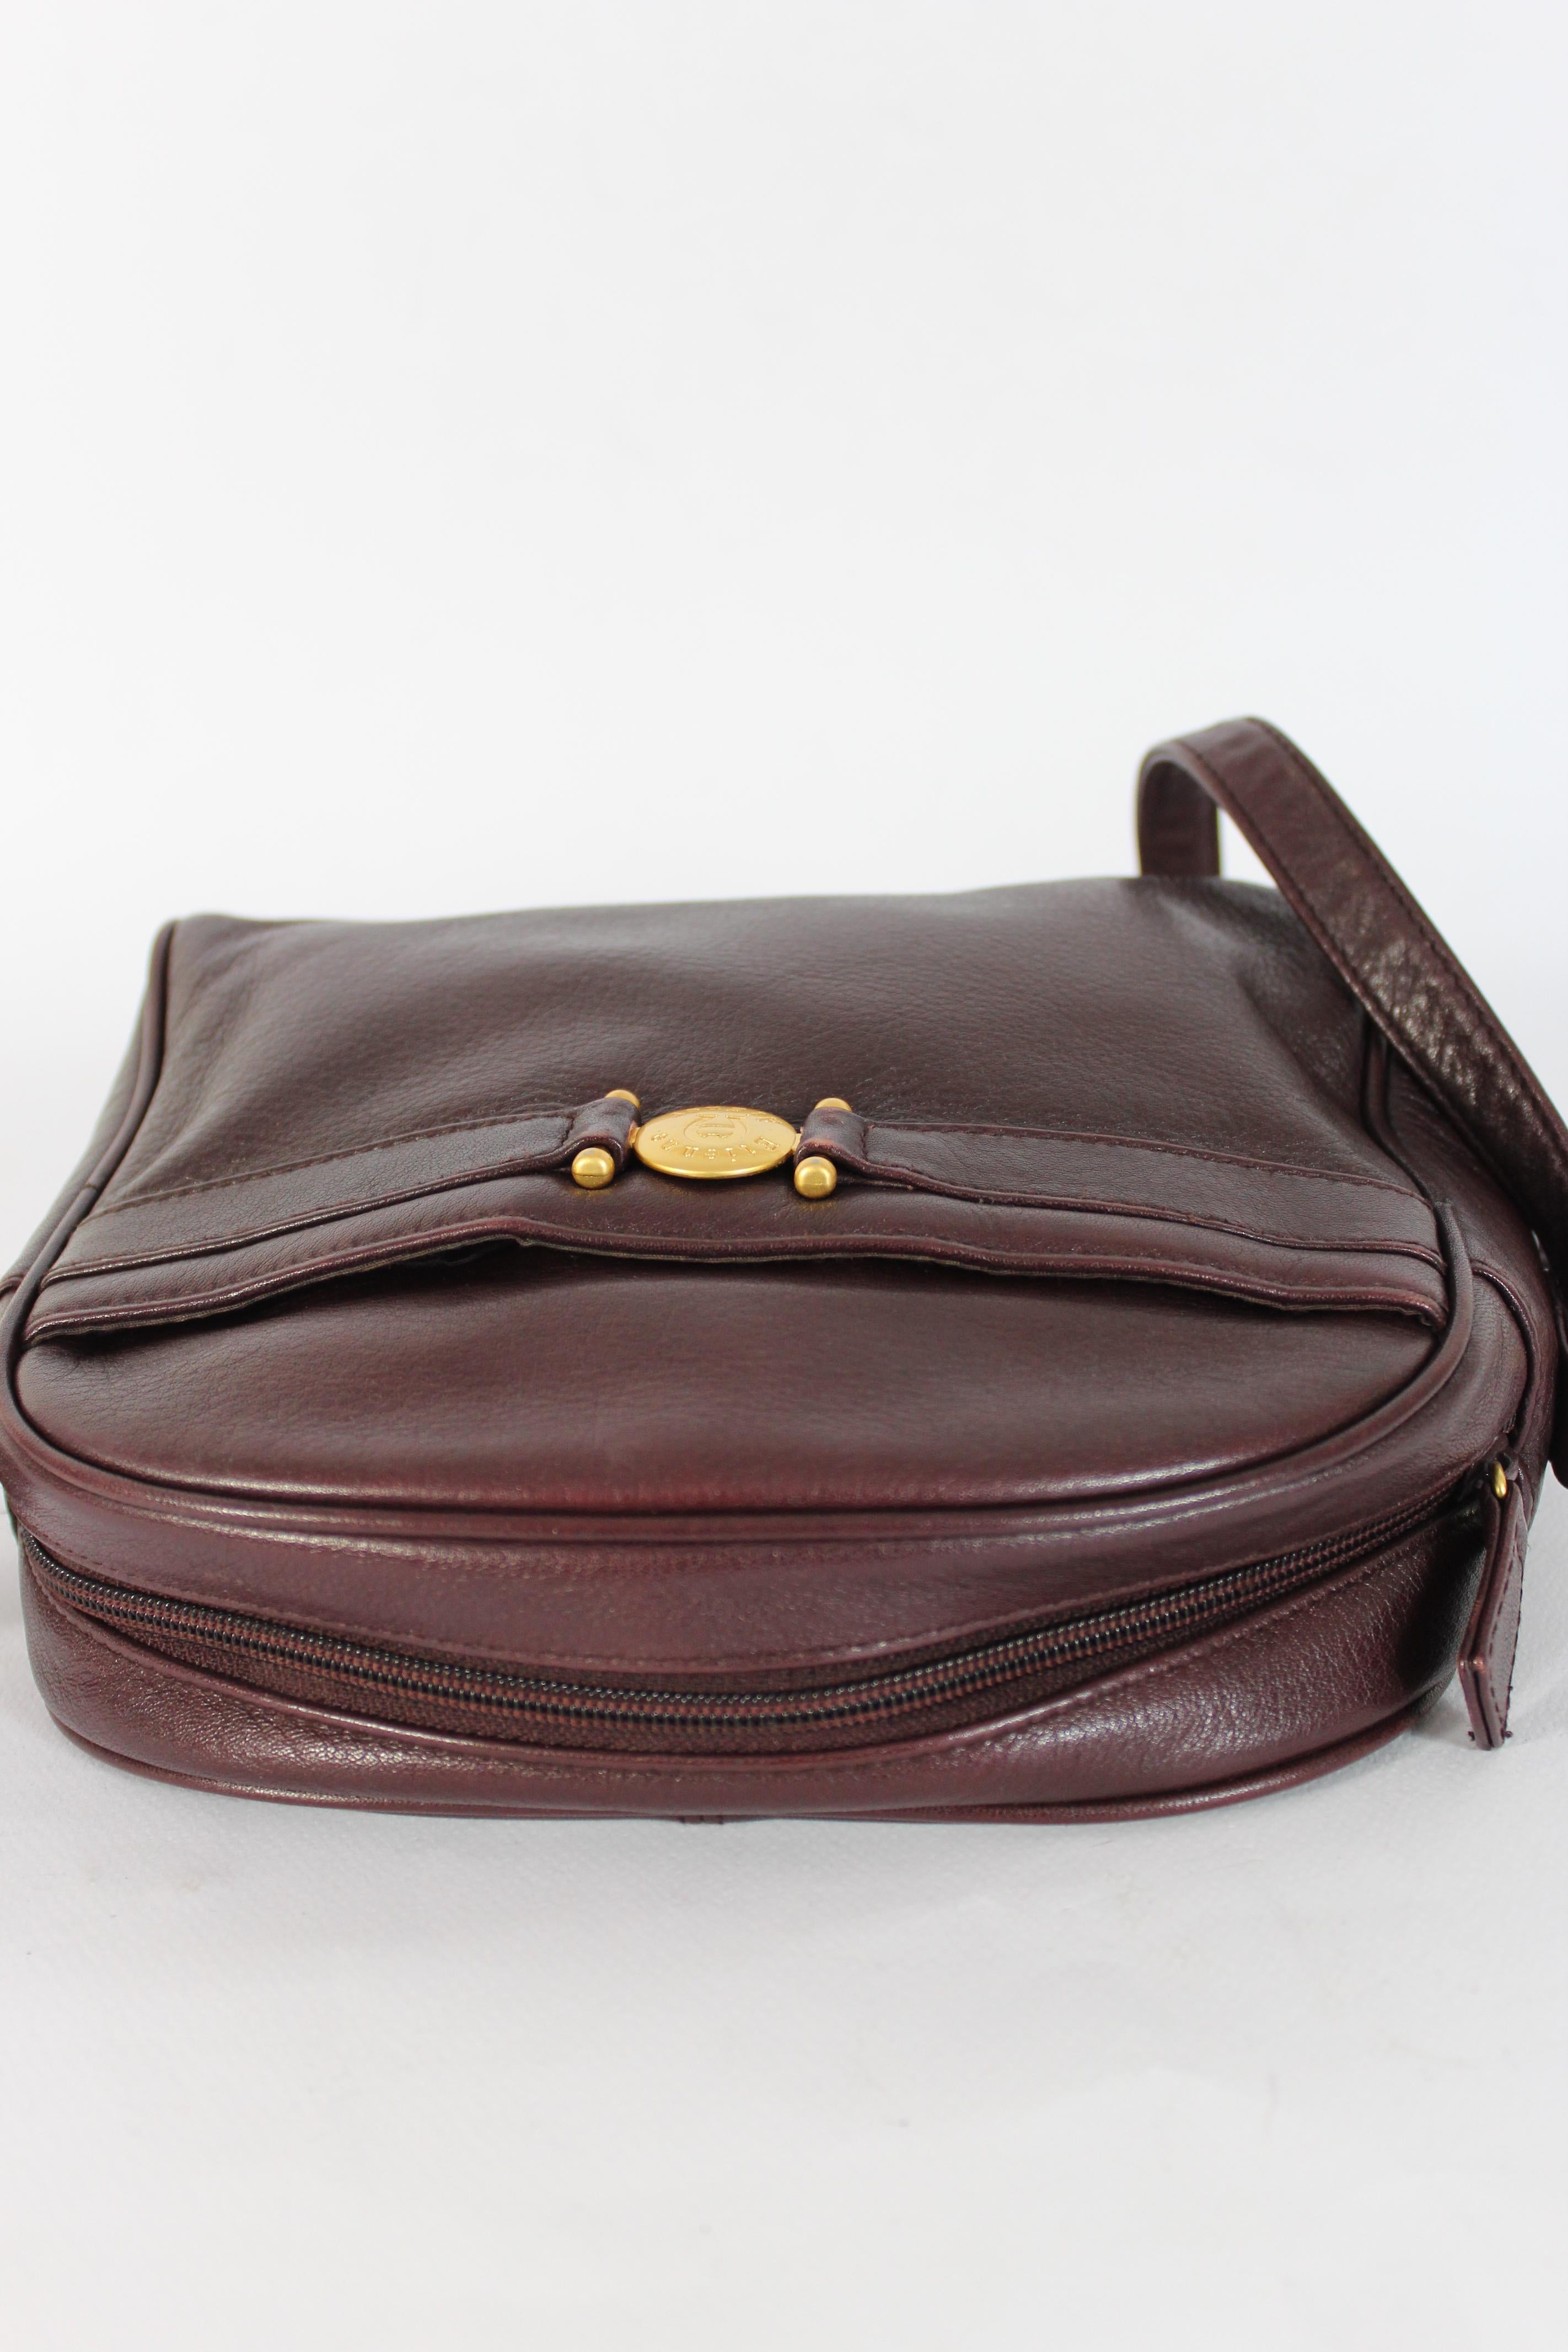 Etienne Aigner Burgundy Leather Shoulder Bag 1980s In Good Condition In Brindisi, Bt